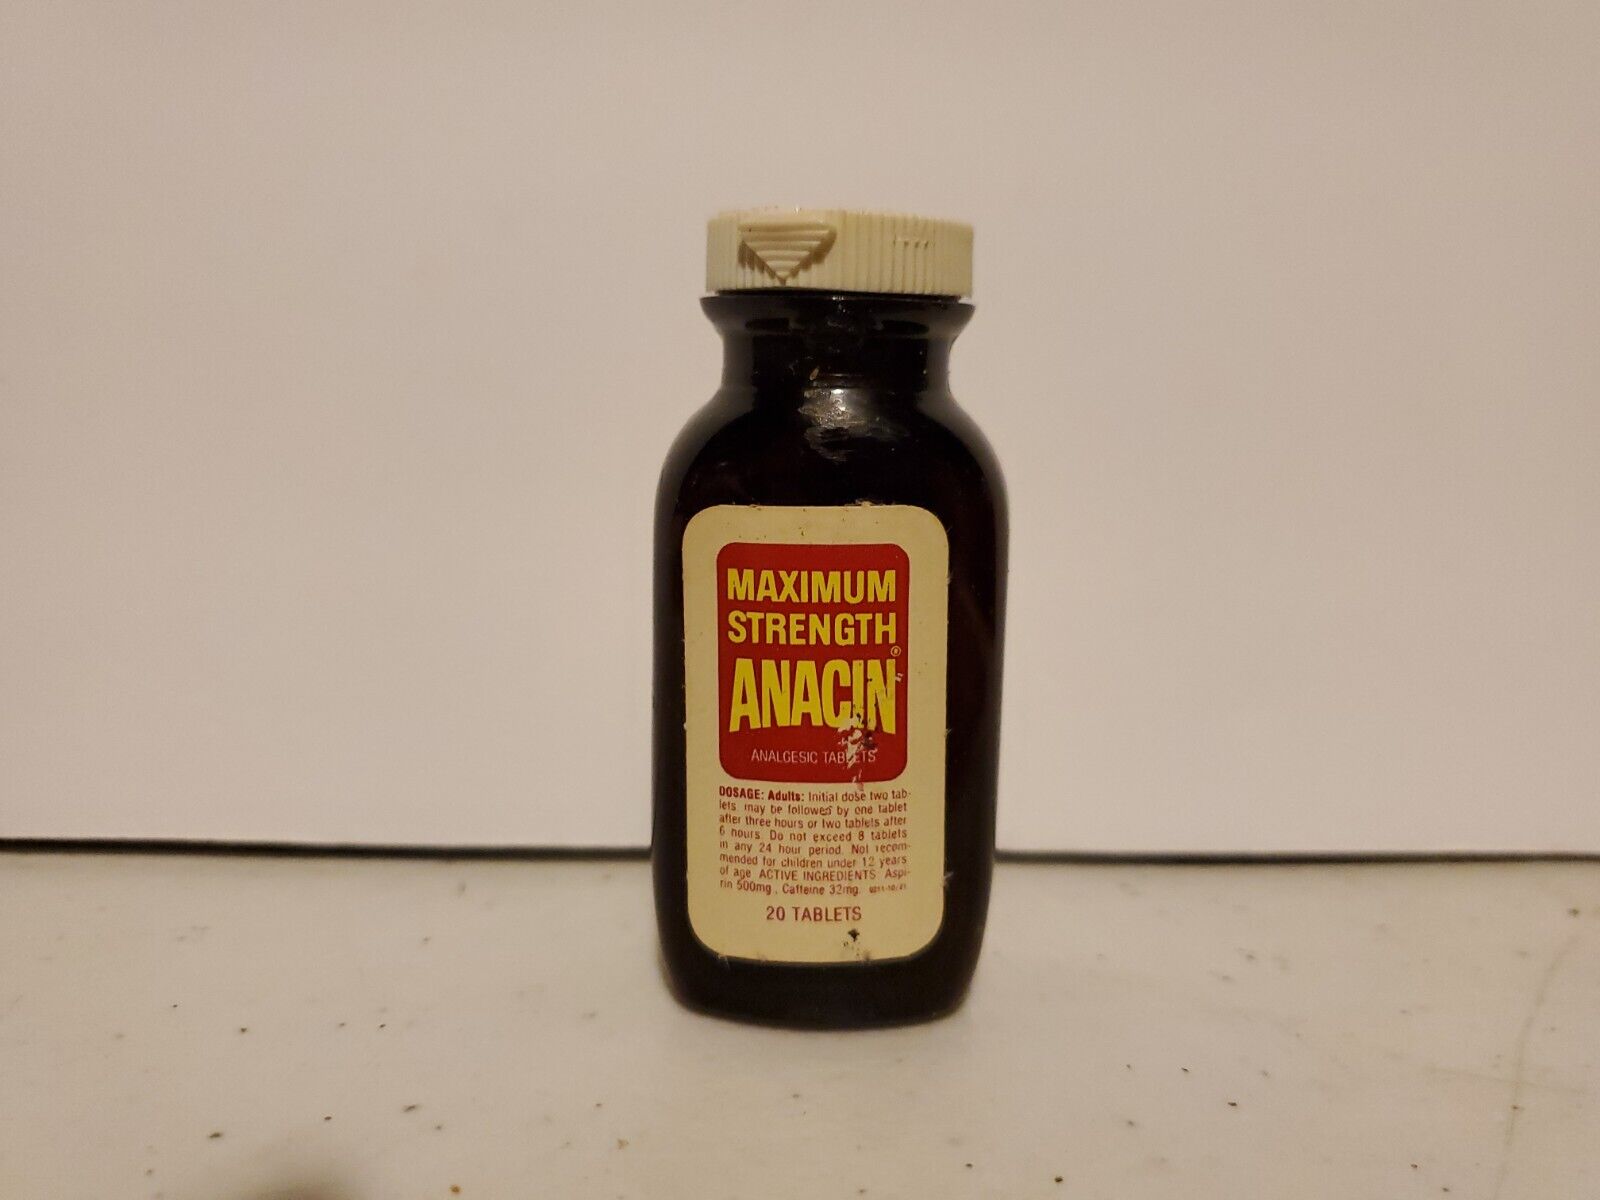 Vintage Maximum Strength Anacin EMPTY Medicine Bottle For Display